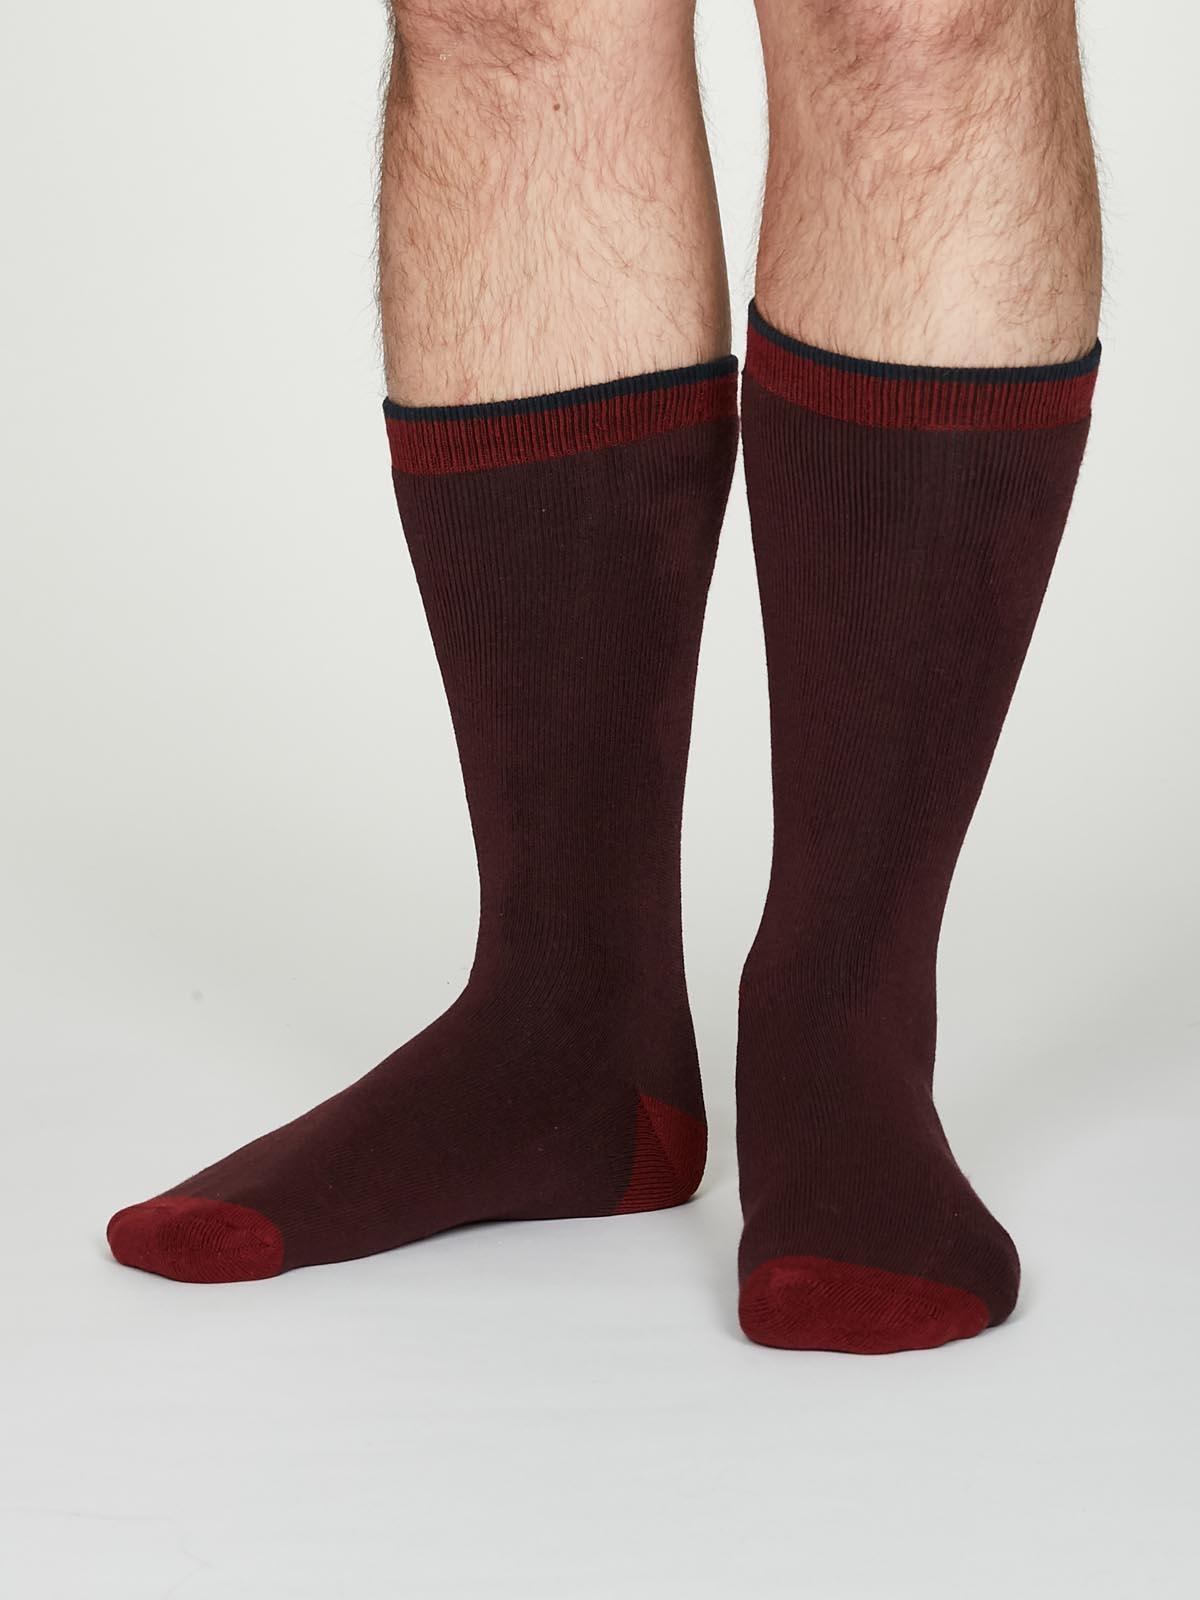 Walker Socks - Burgundy - Thought Clothing UK